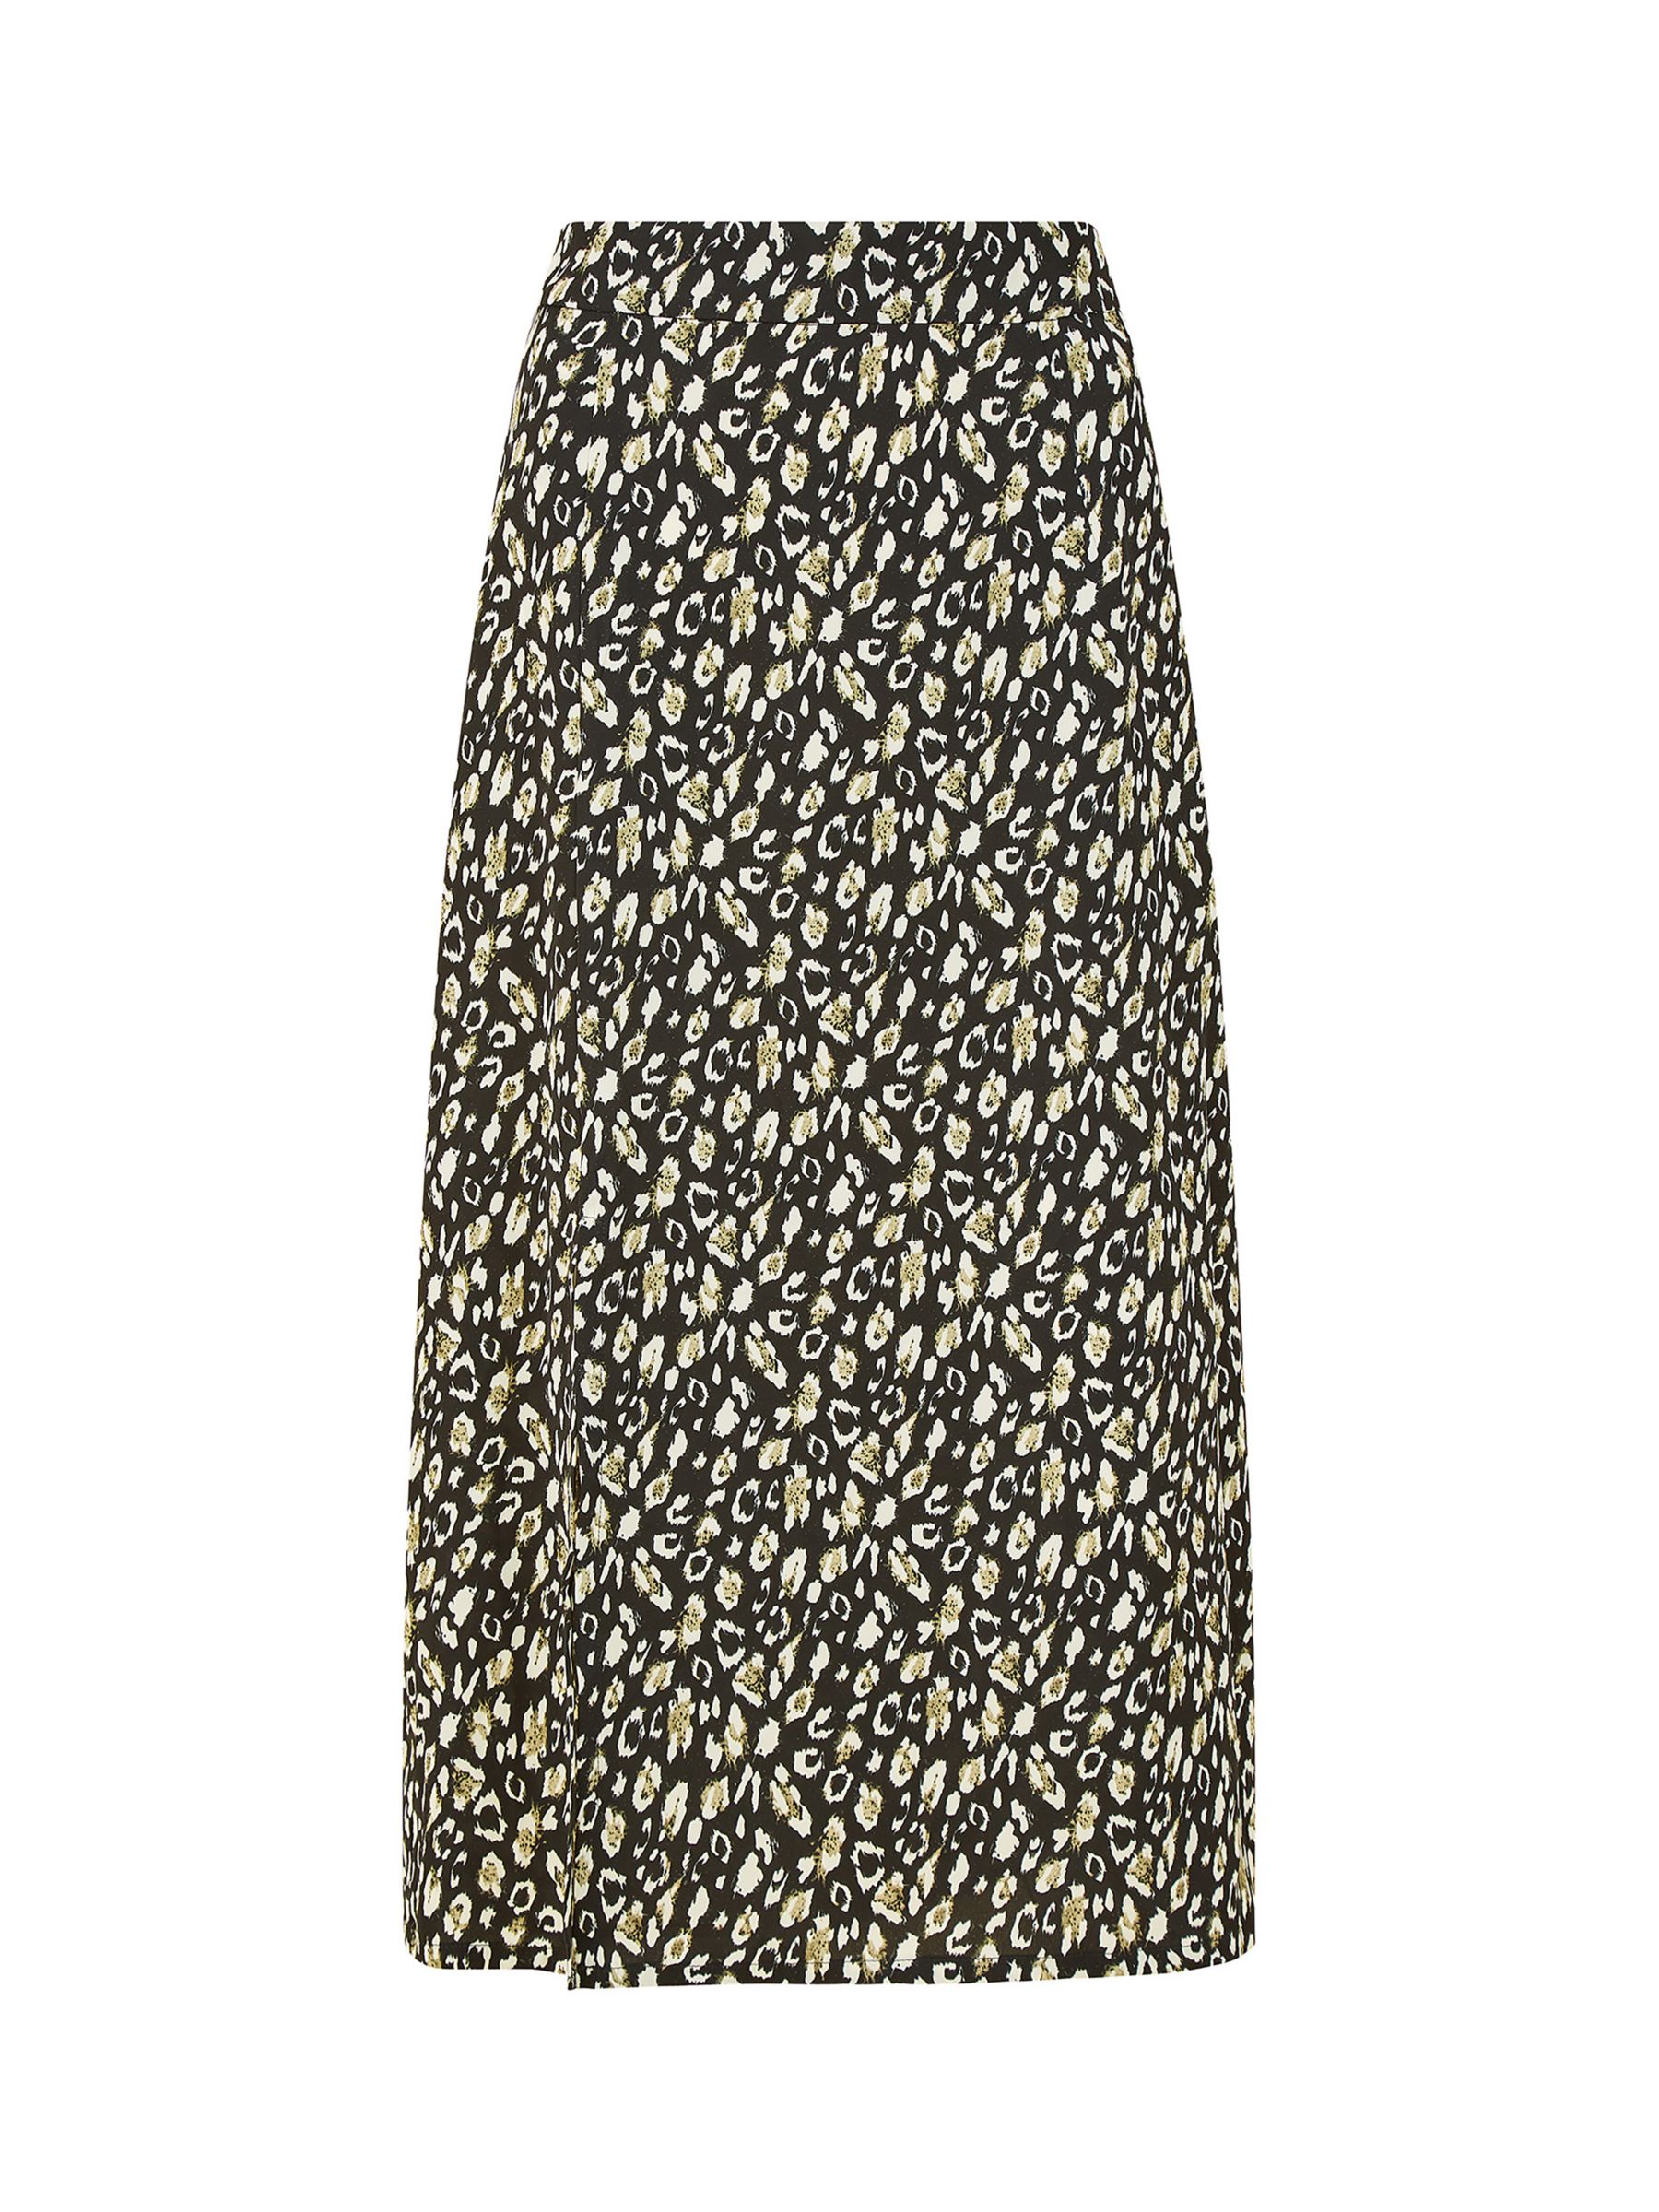 Buy Yumi Leopard Print Midi Skirt, Black Online at johnlewis.com